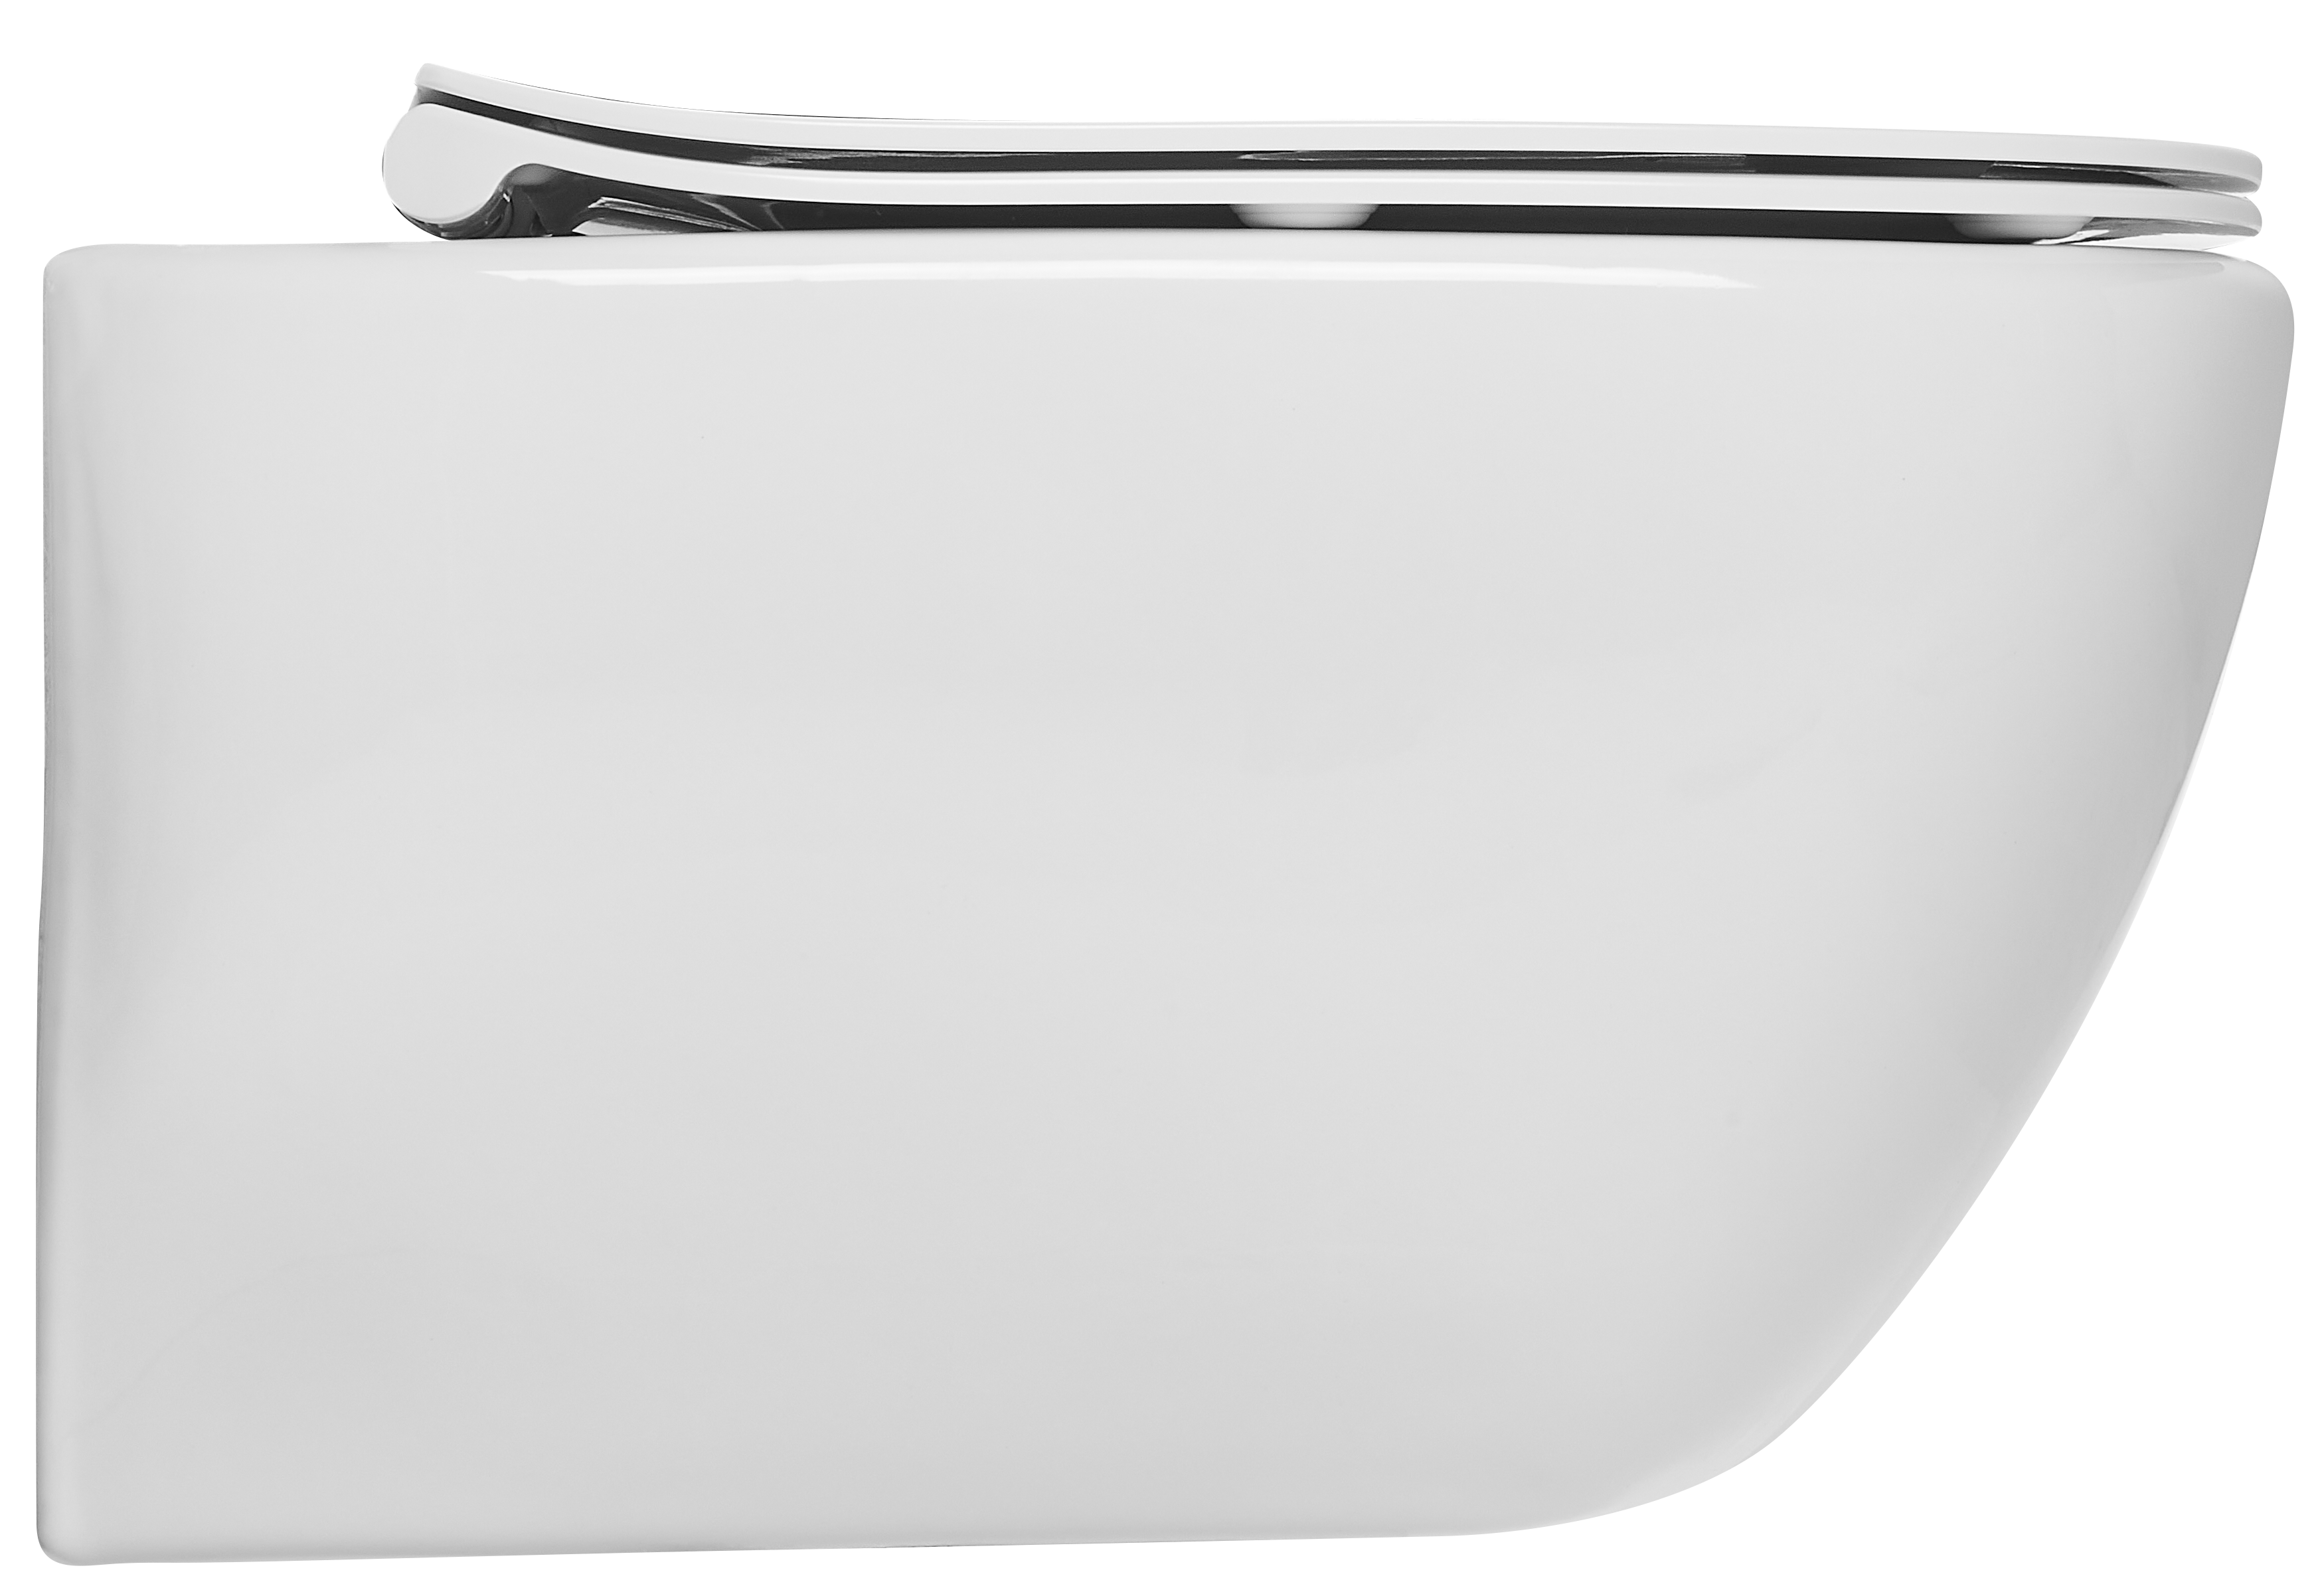 Taza WC suspendido IDEAL STANDARD Idealmood salida horizontal blanco mate